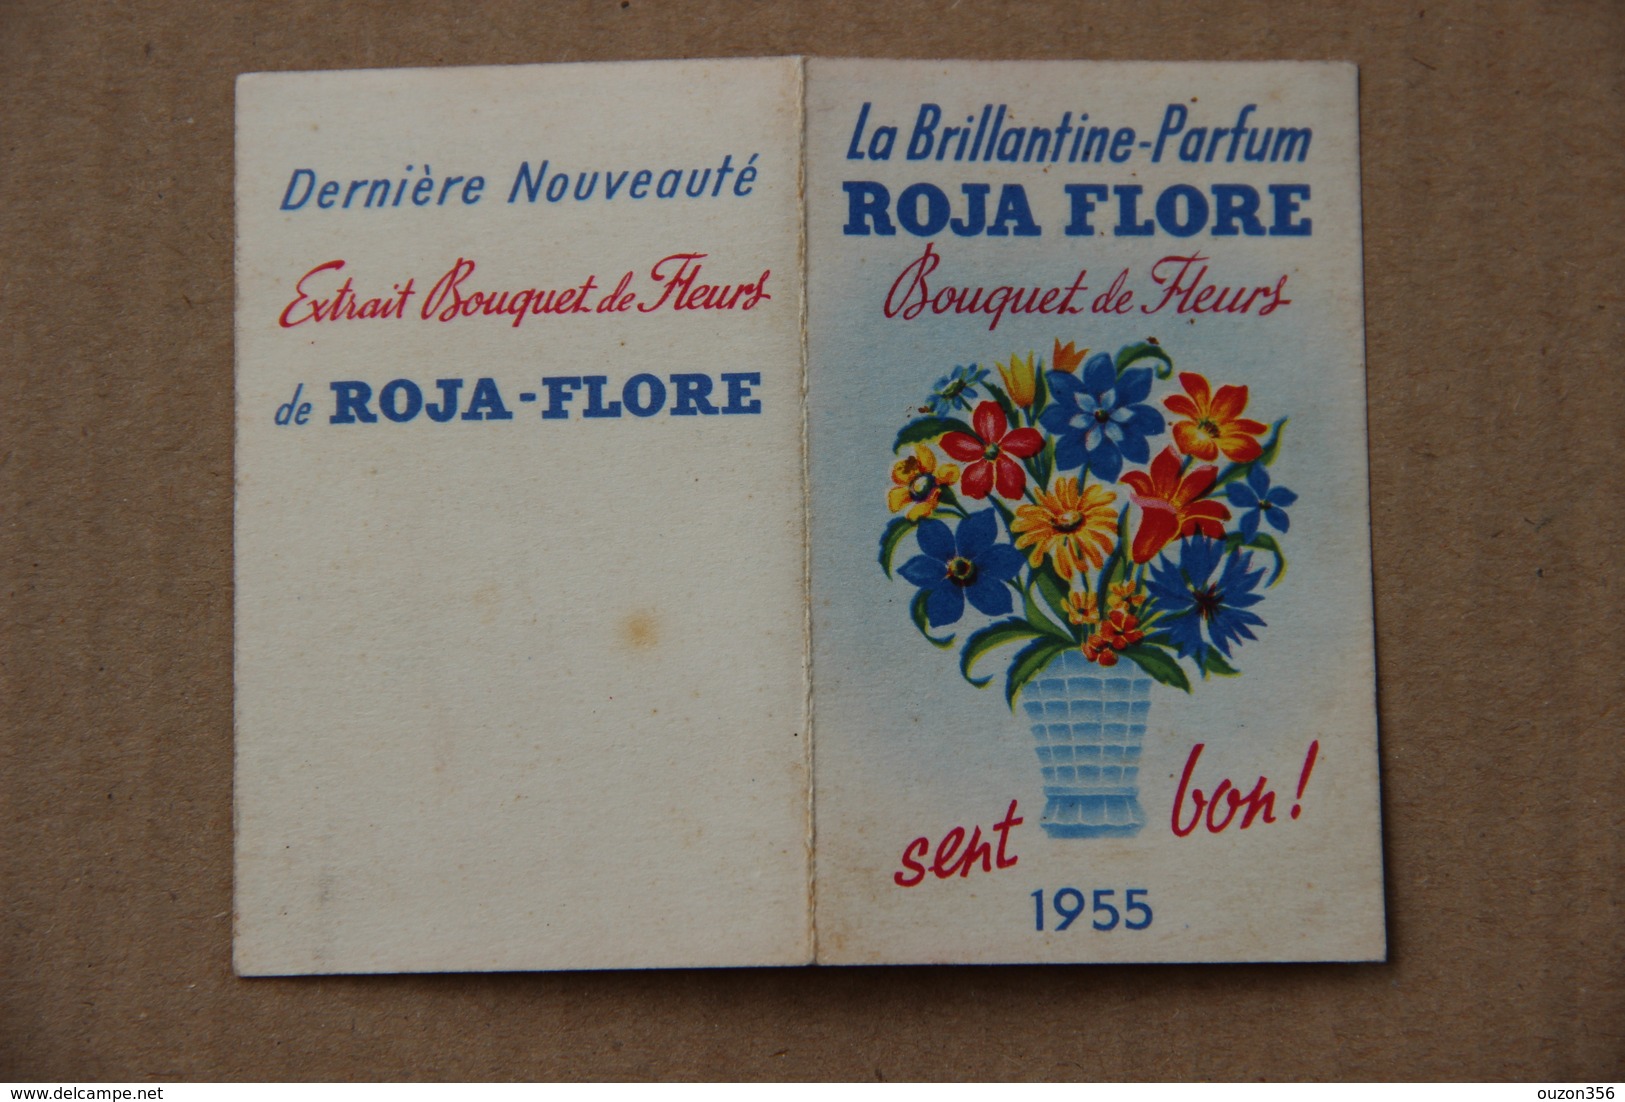 Calendrier Brillantine-Parfum Roja Flore, 1955 - Petit Format : 1941-60